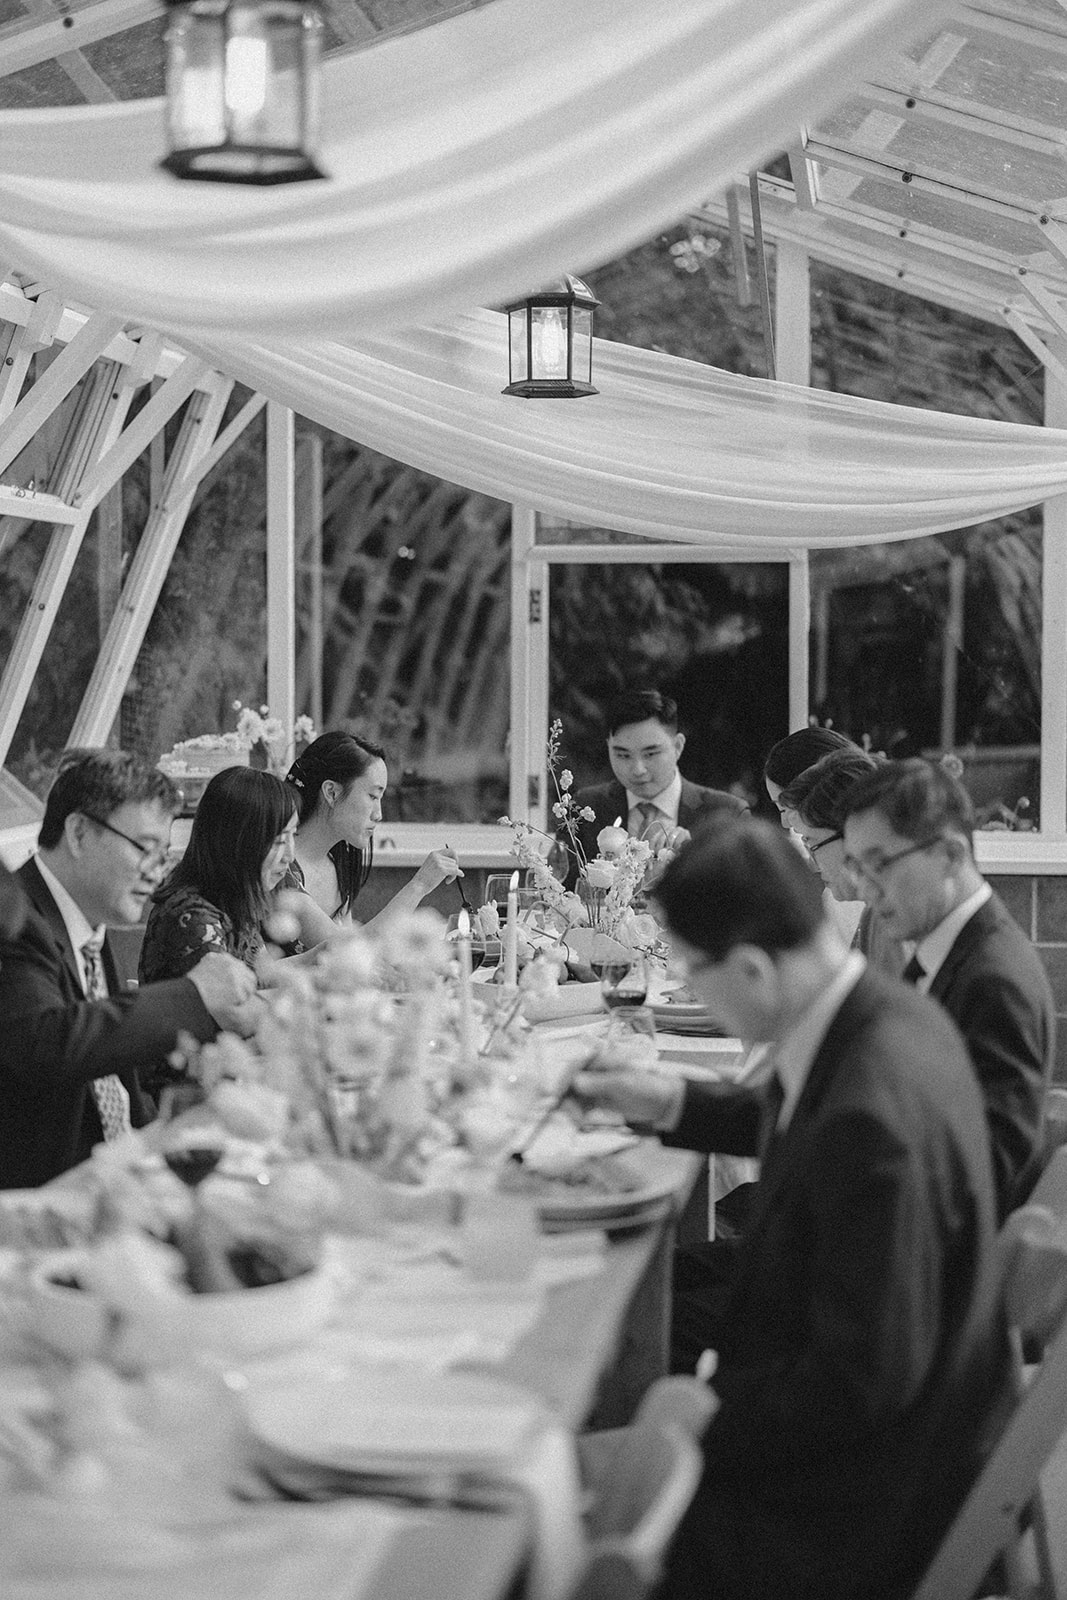 Greenhouse wedding, outdoor wedding, intimate wedding inspiration, table setting, classic wedding inspiration, intimate wedding